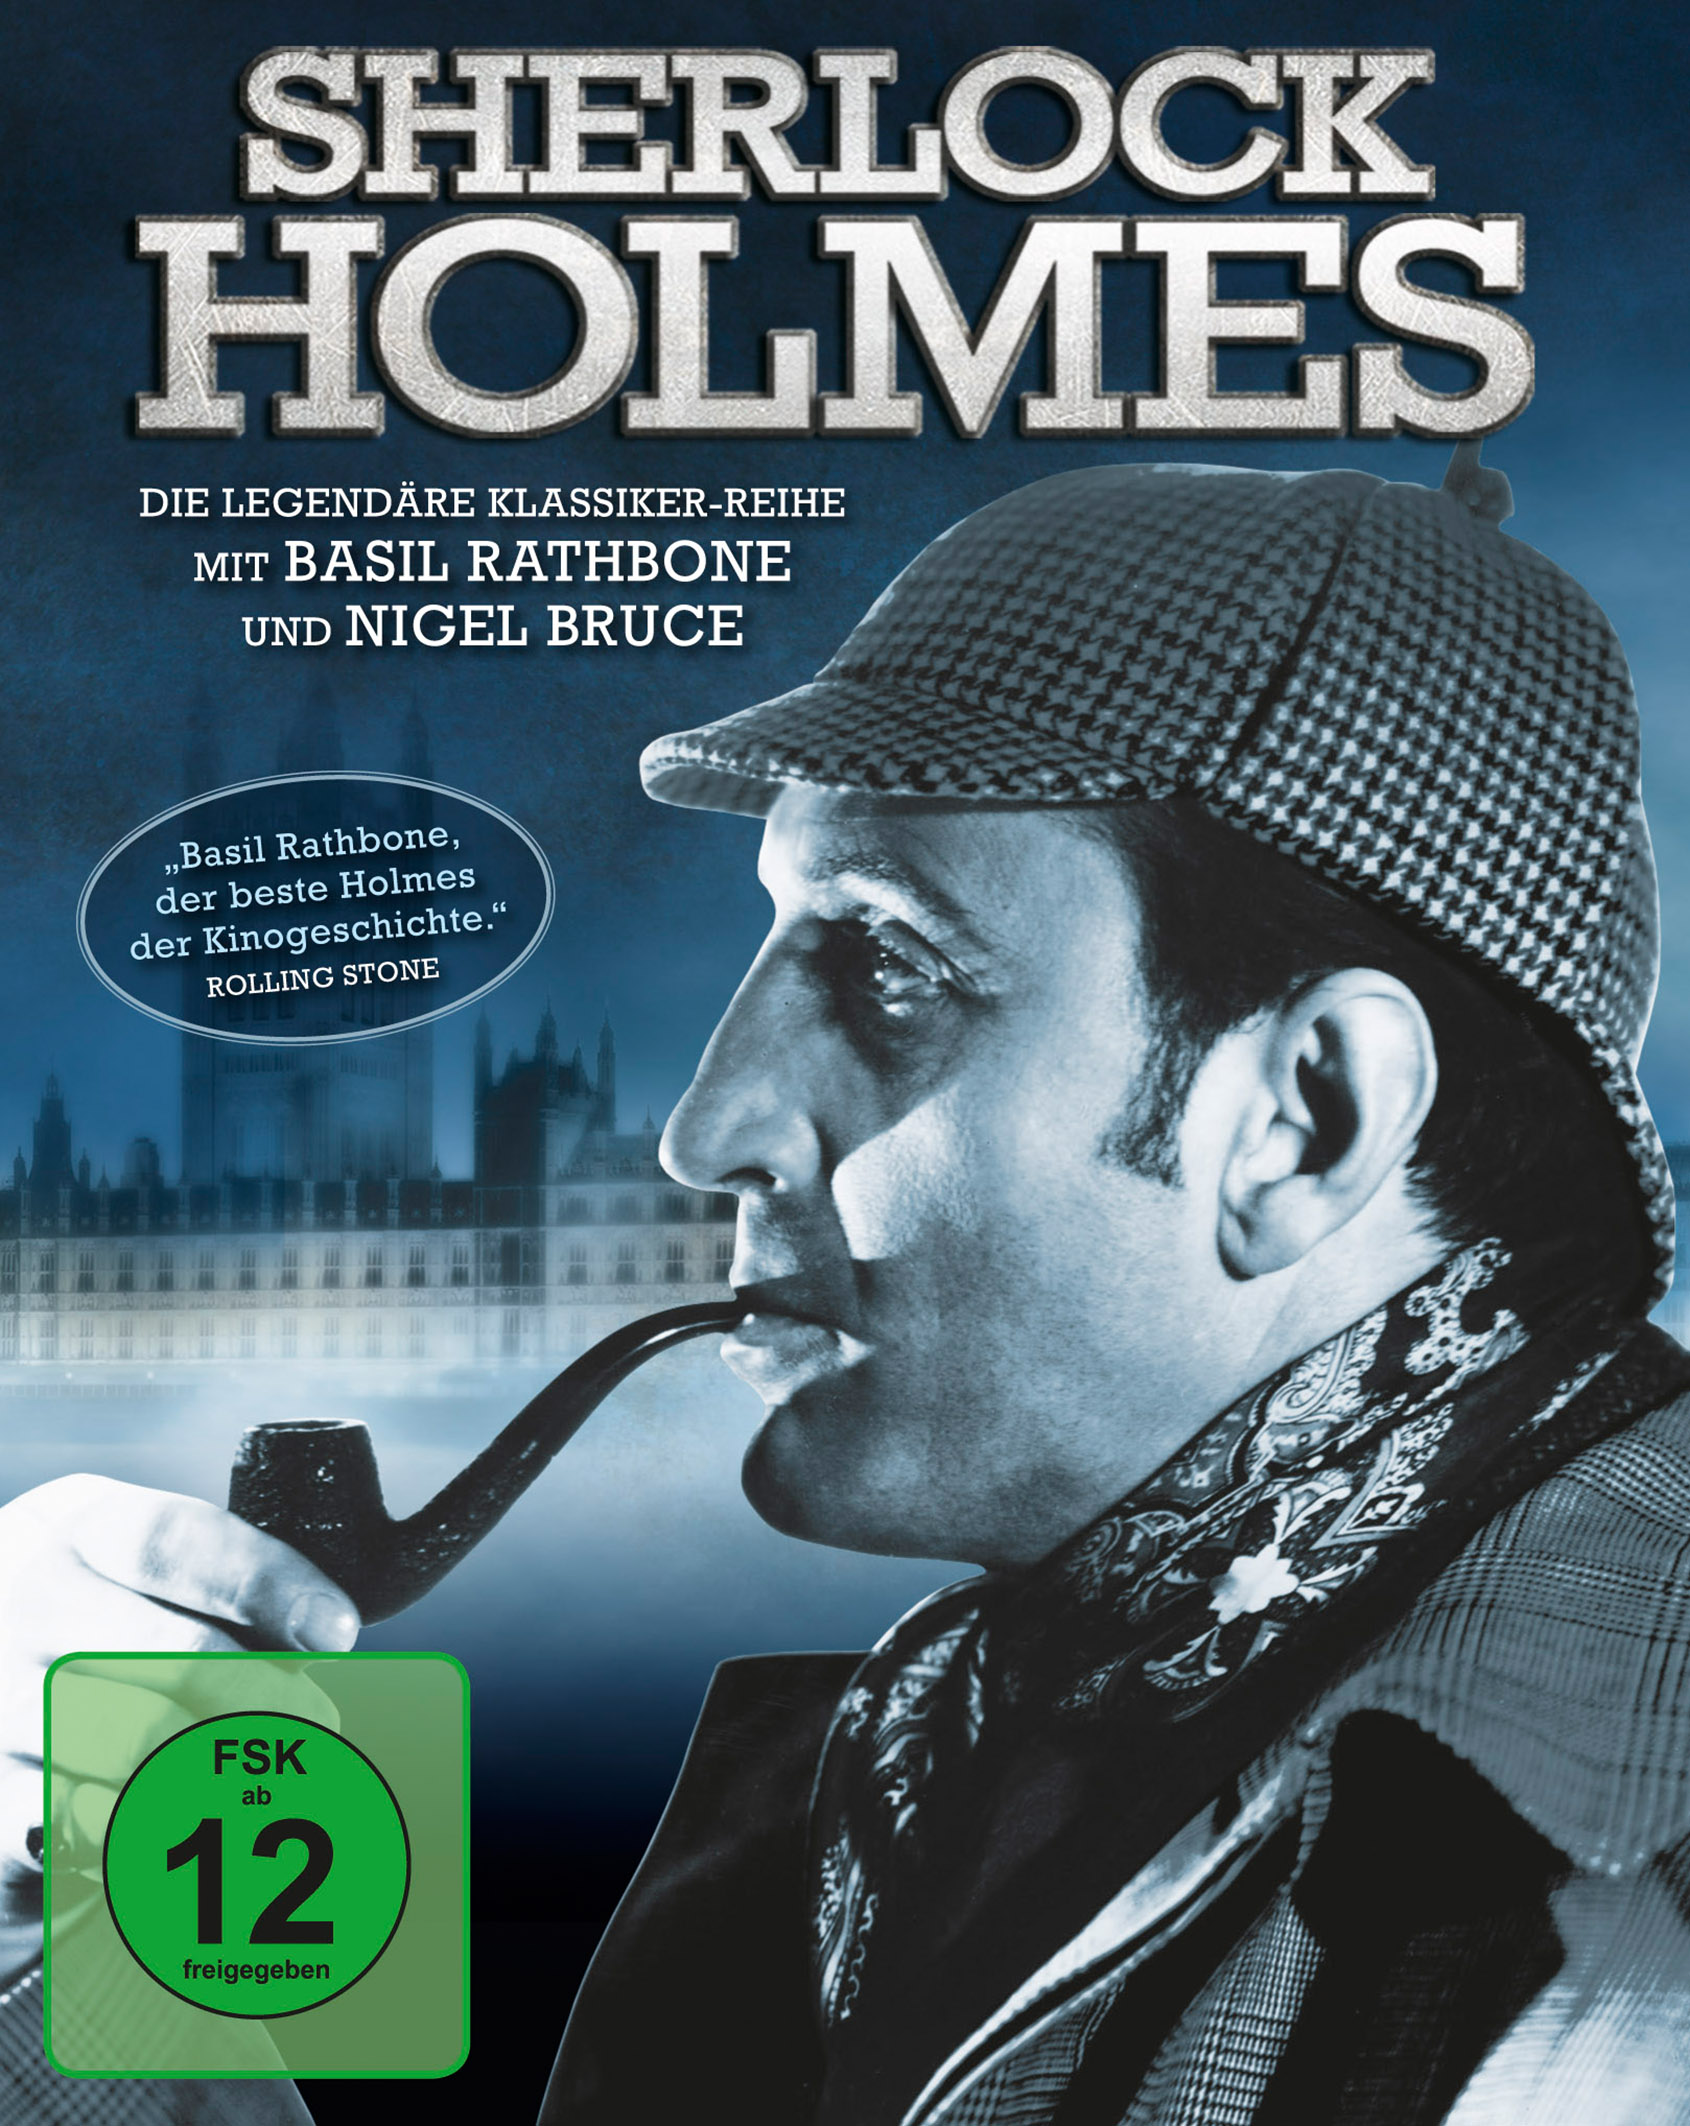 Sherlock Holmes Edition (Keepcase) (DVD)